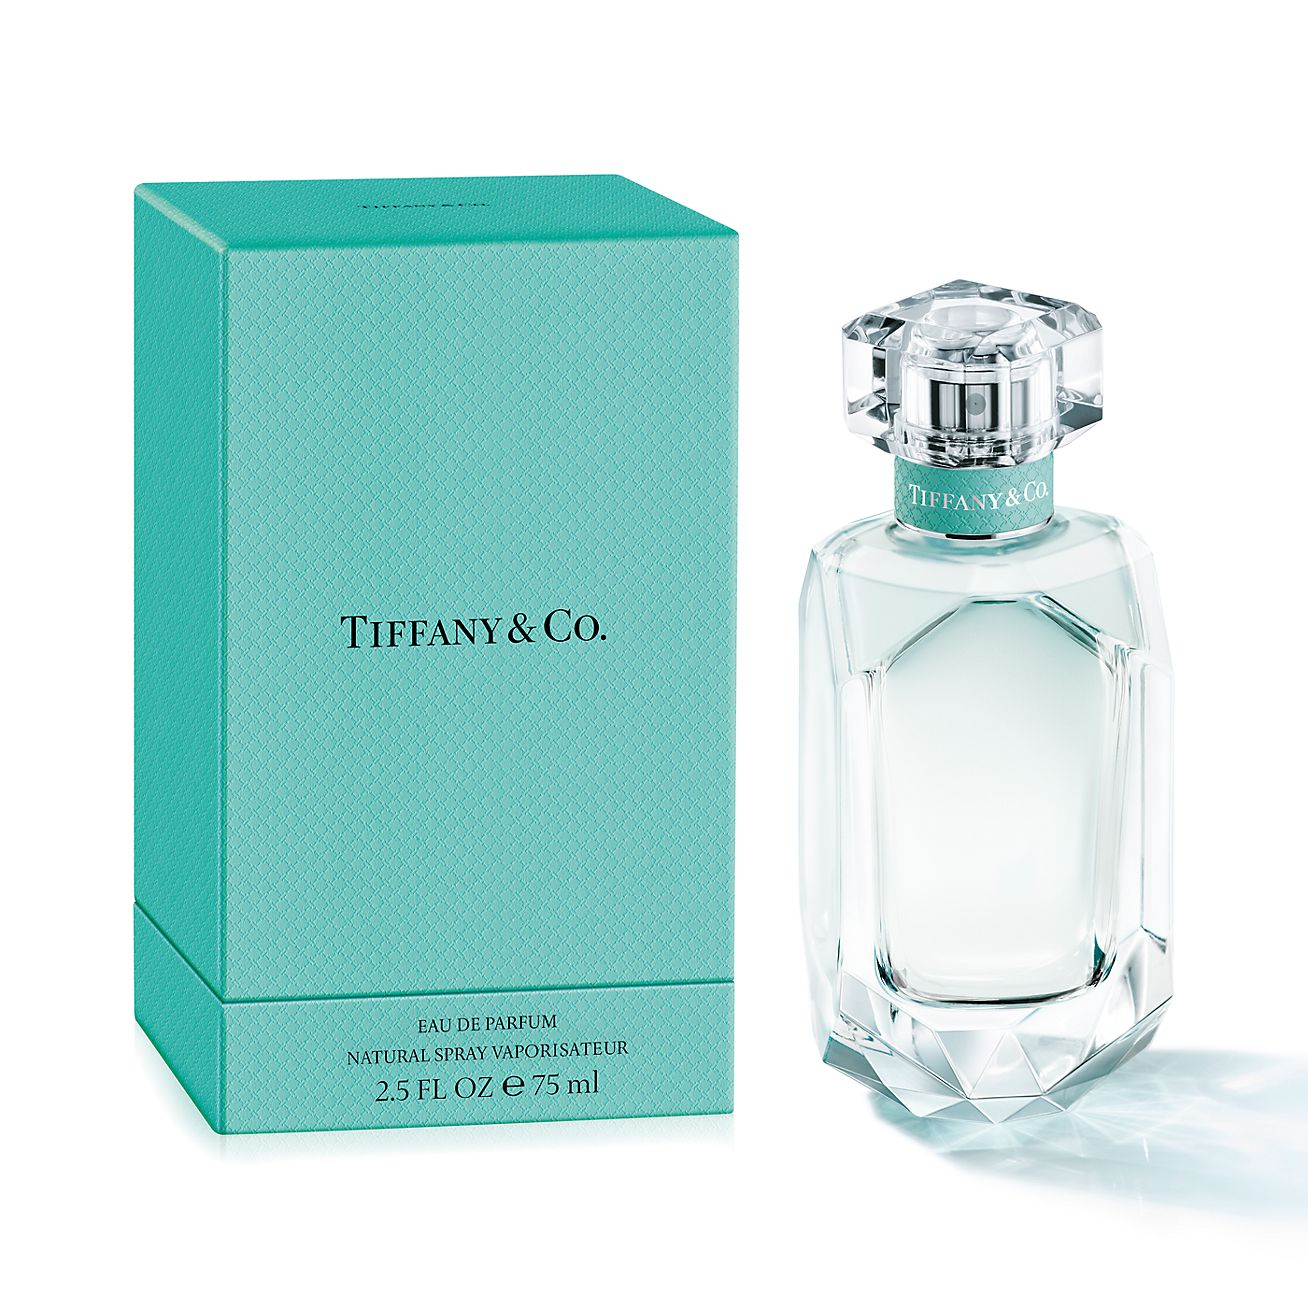 Tiffany eau de parfum, 2.5 ounces.